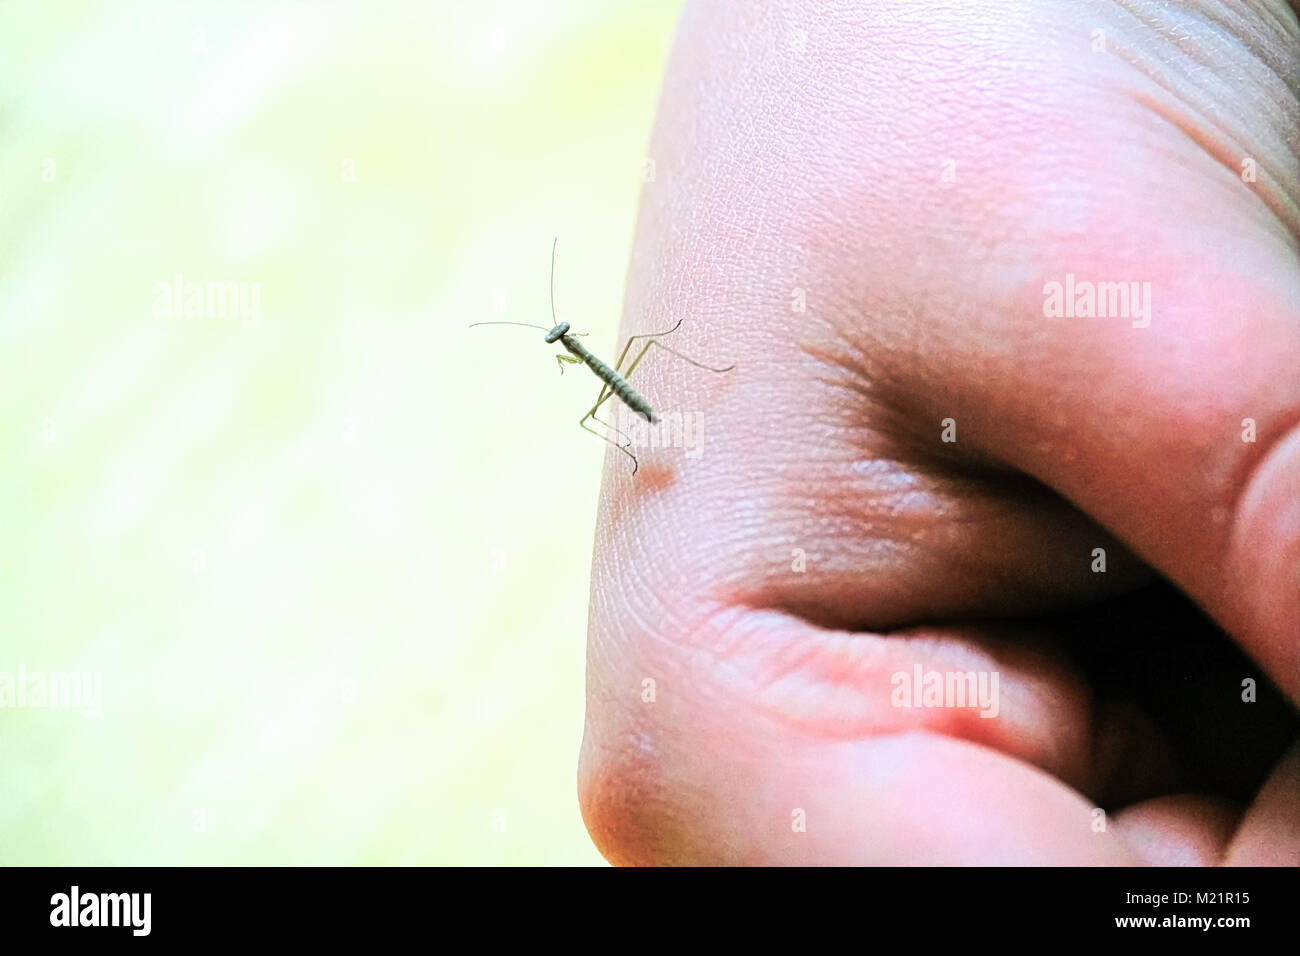 A tiny praying mantis on a hand, Stock Photo